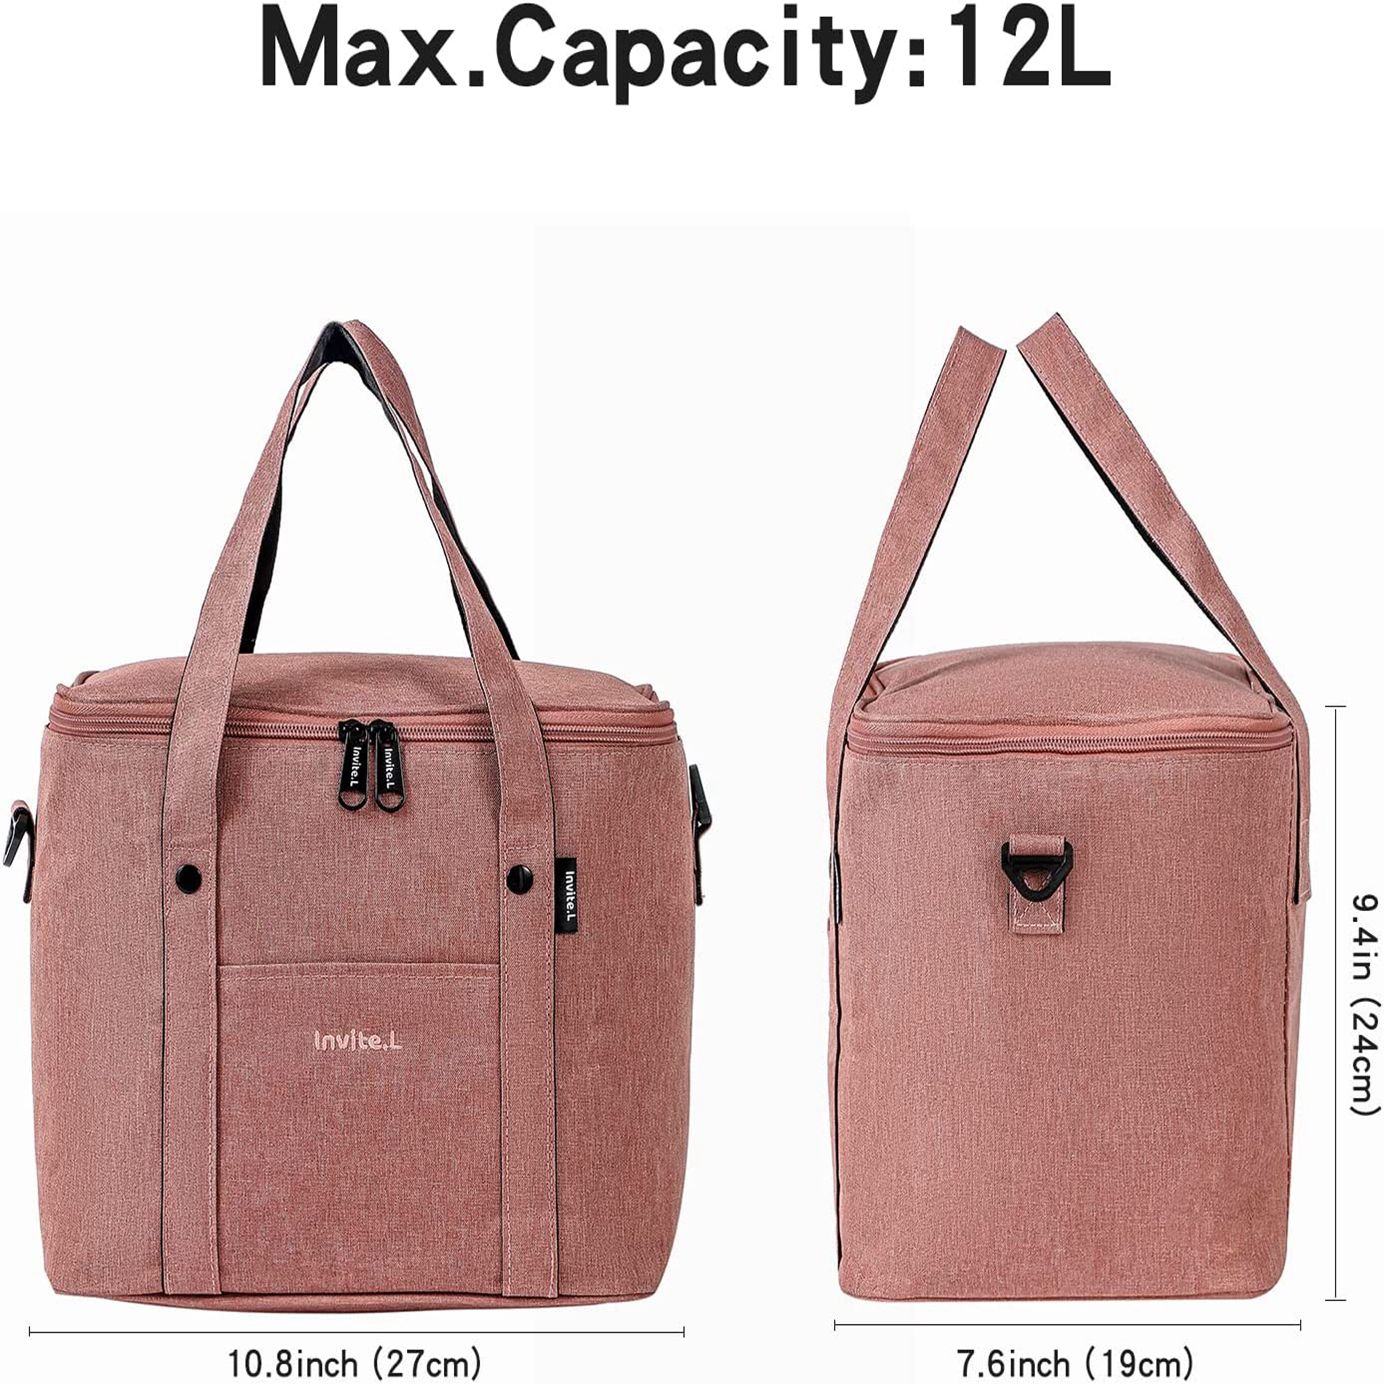 Lunch Backpack, Insulated Cooler Backpack Lunch Box for Men Women, 15. –  RUCYEN